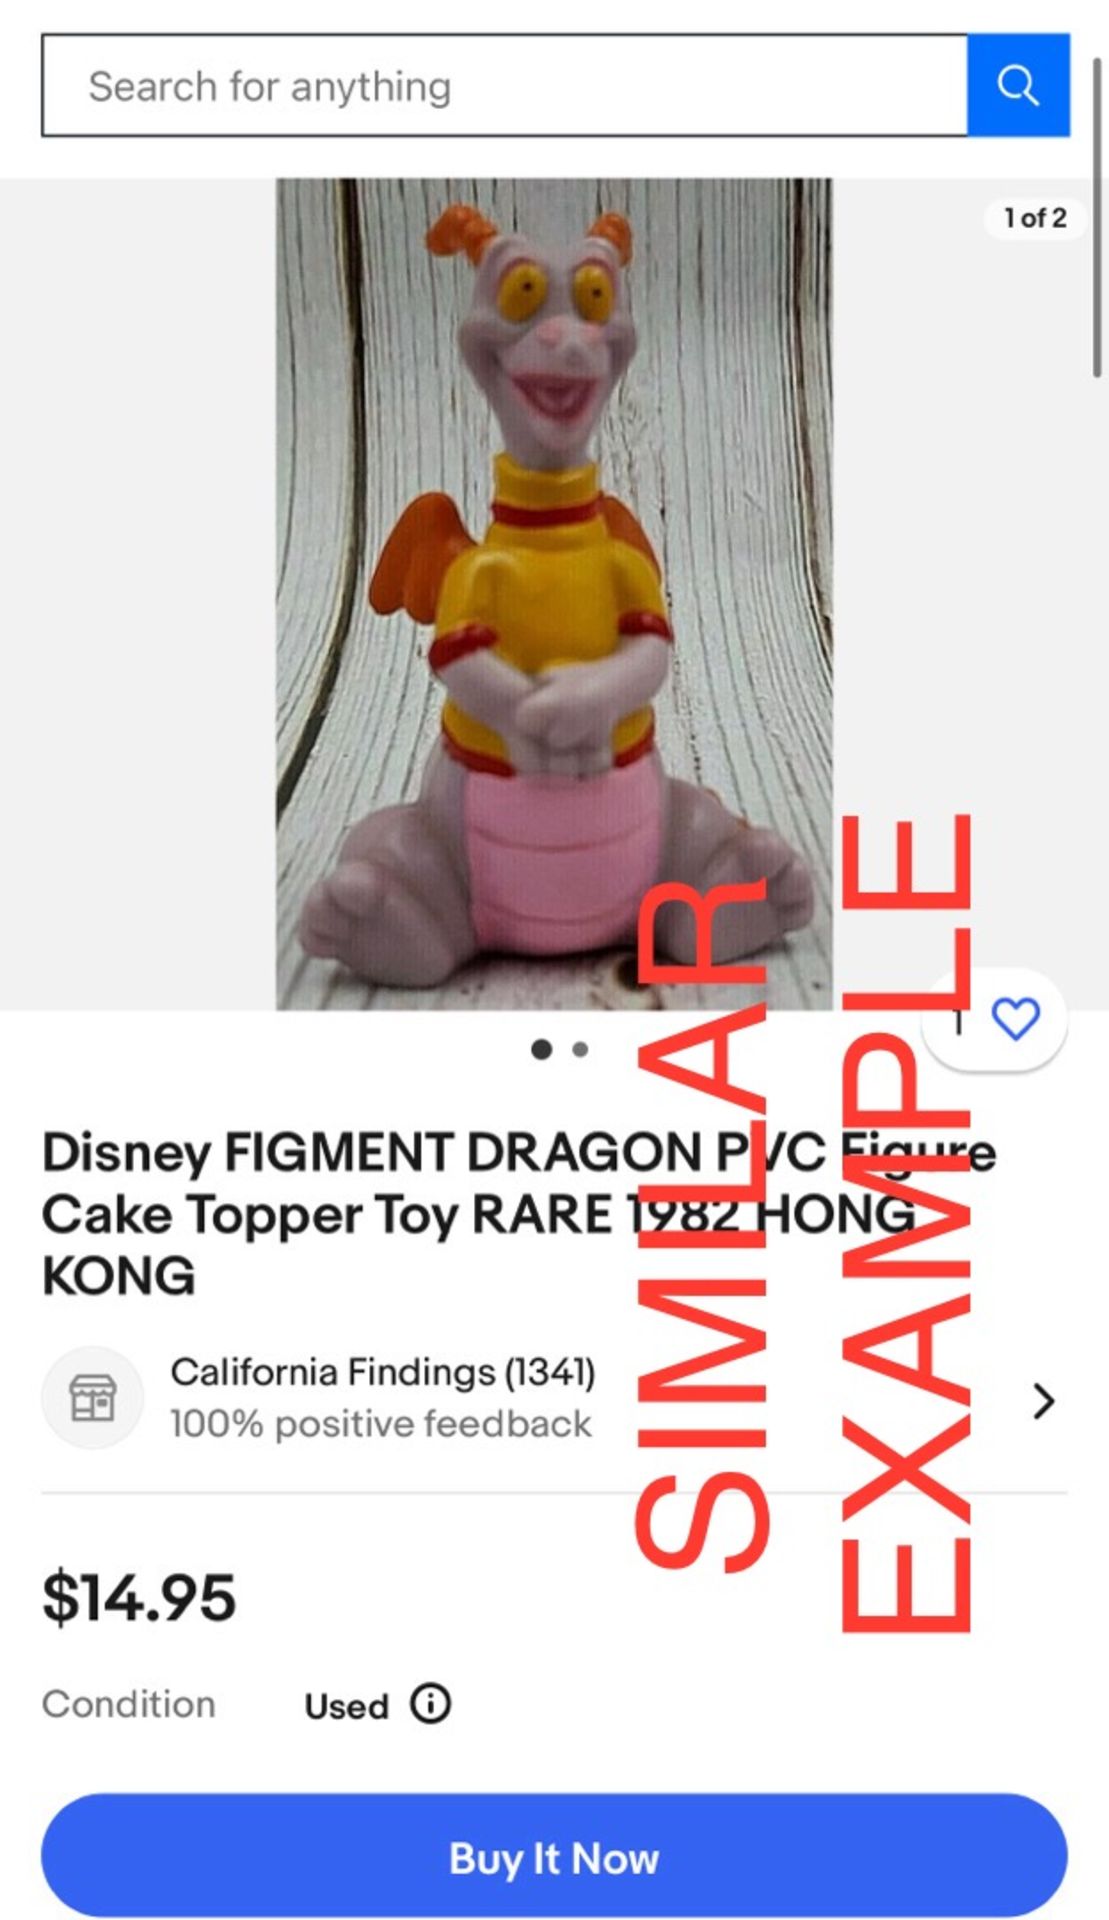 Disney FIGMENT DRAGON PVC Figure Cake Topper Toy - Rare 1982 HONG KONG - Image 3 of 3